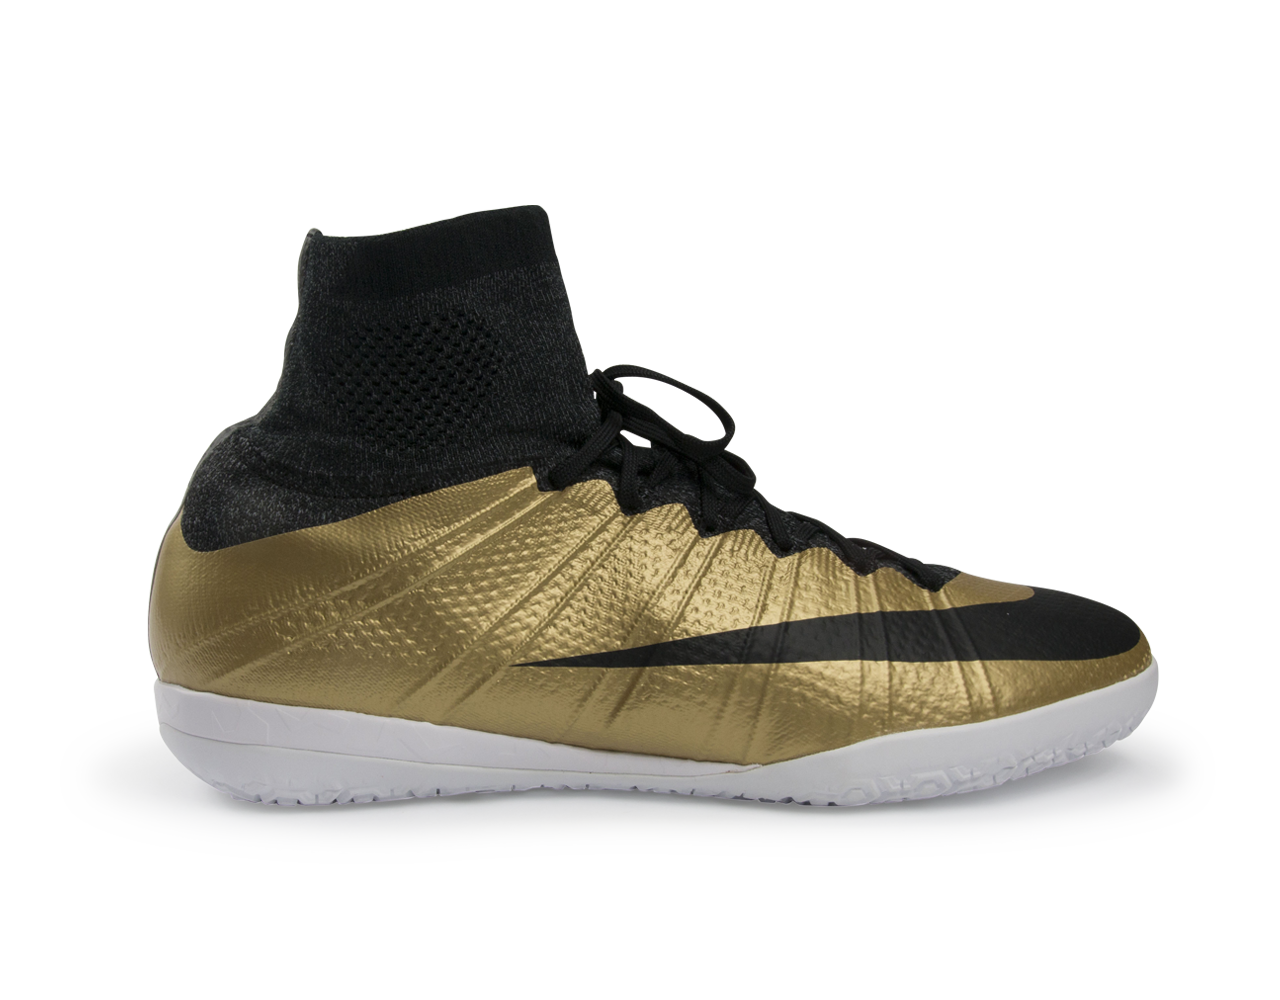 Nike Men's MercurialX Proximo Indoor Soccer Shoes  Metallic Gold/Black/Tour Yellow